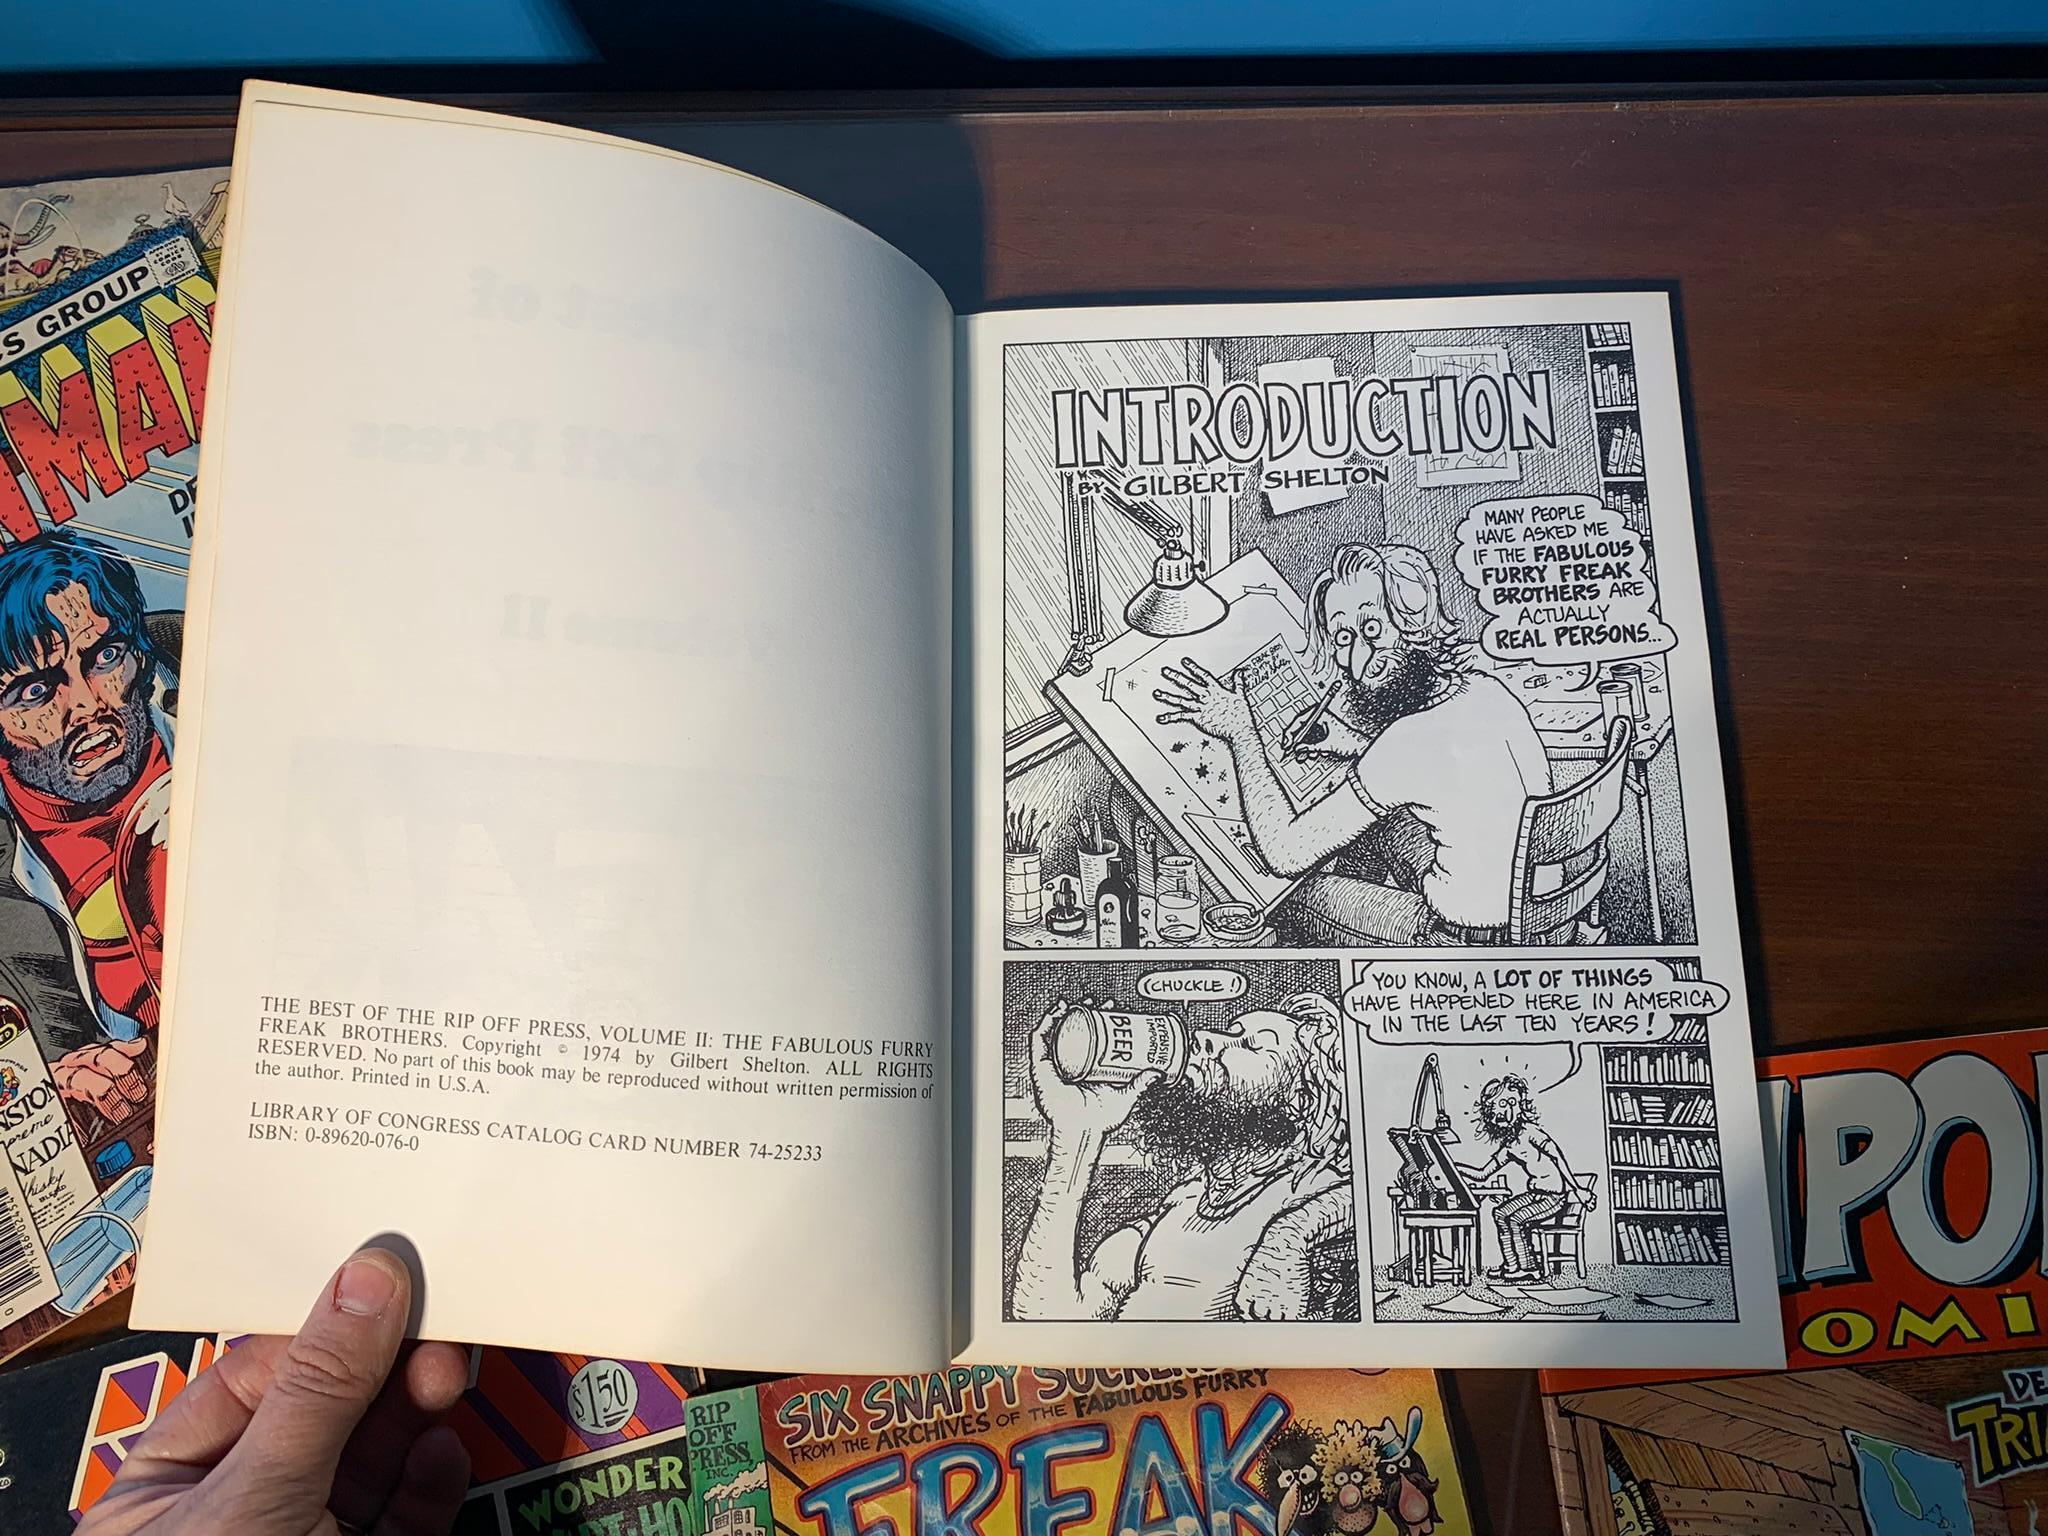 MAD Magazine, Ironman Comic, Rip Off Comix, Choice Meats Comics, & Freak Brothers Comics